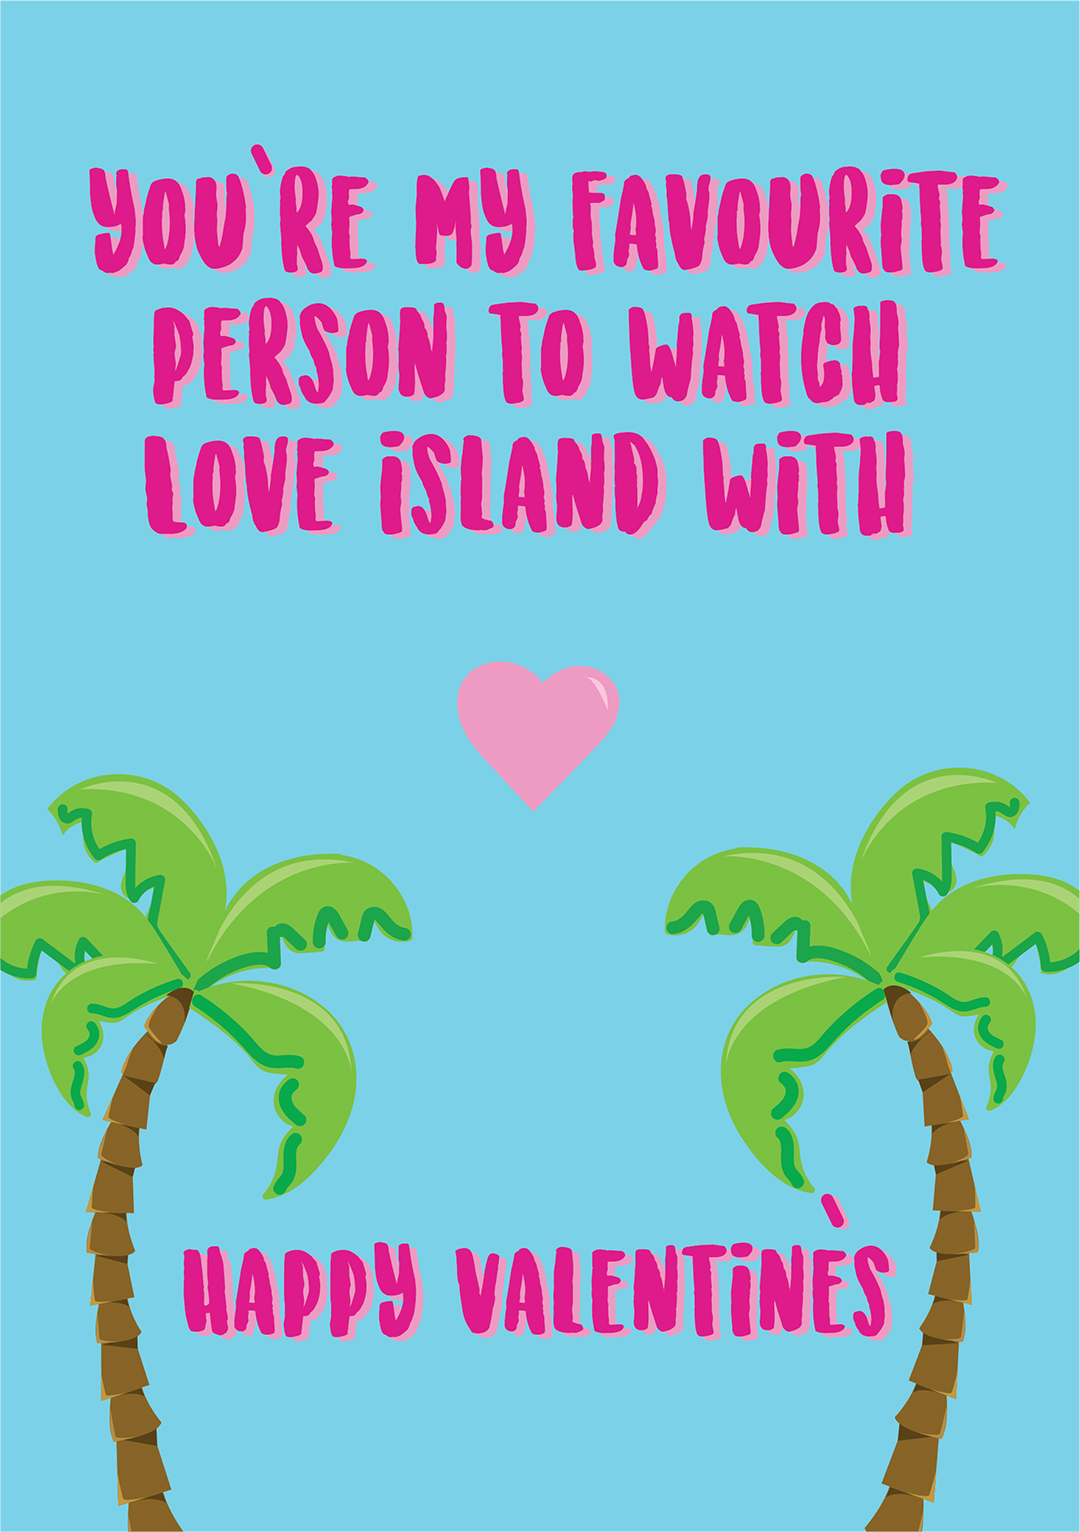 Love Island - Valentine's Day